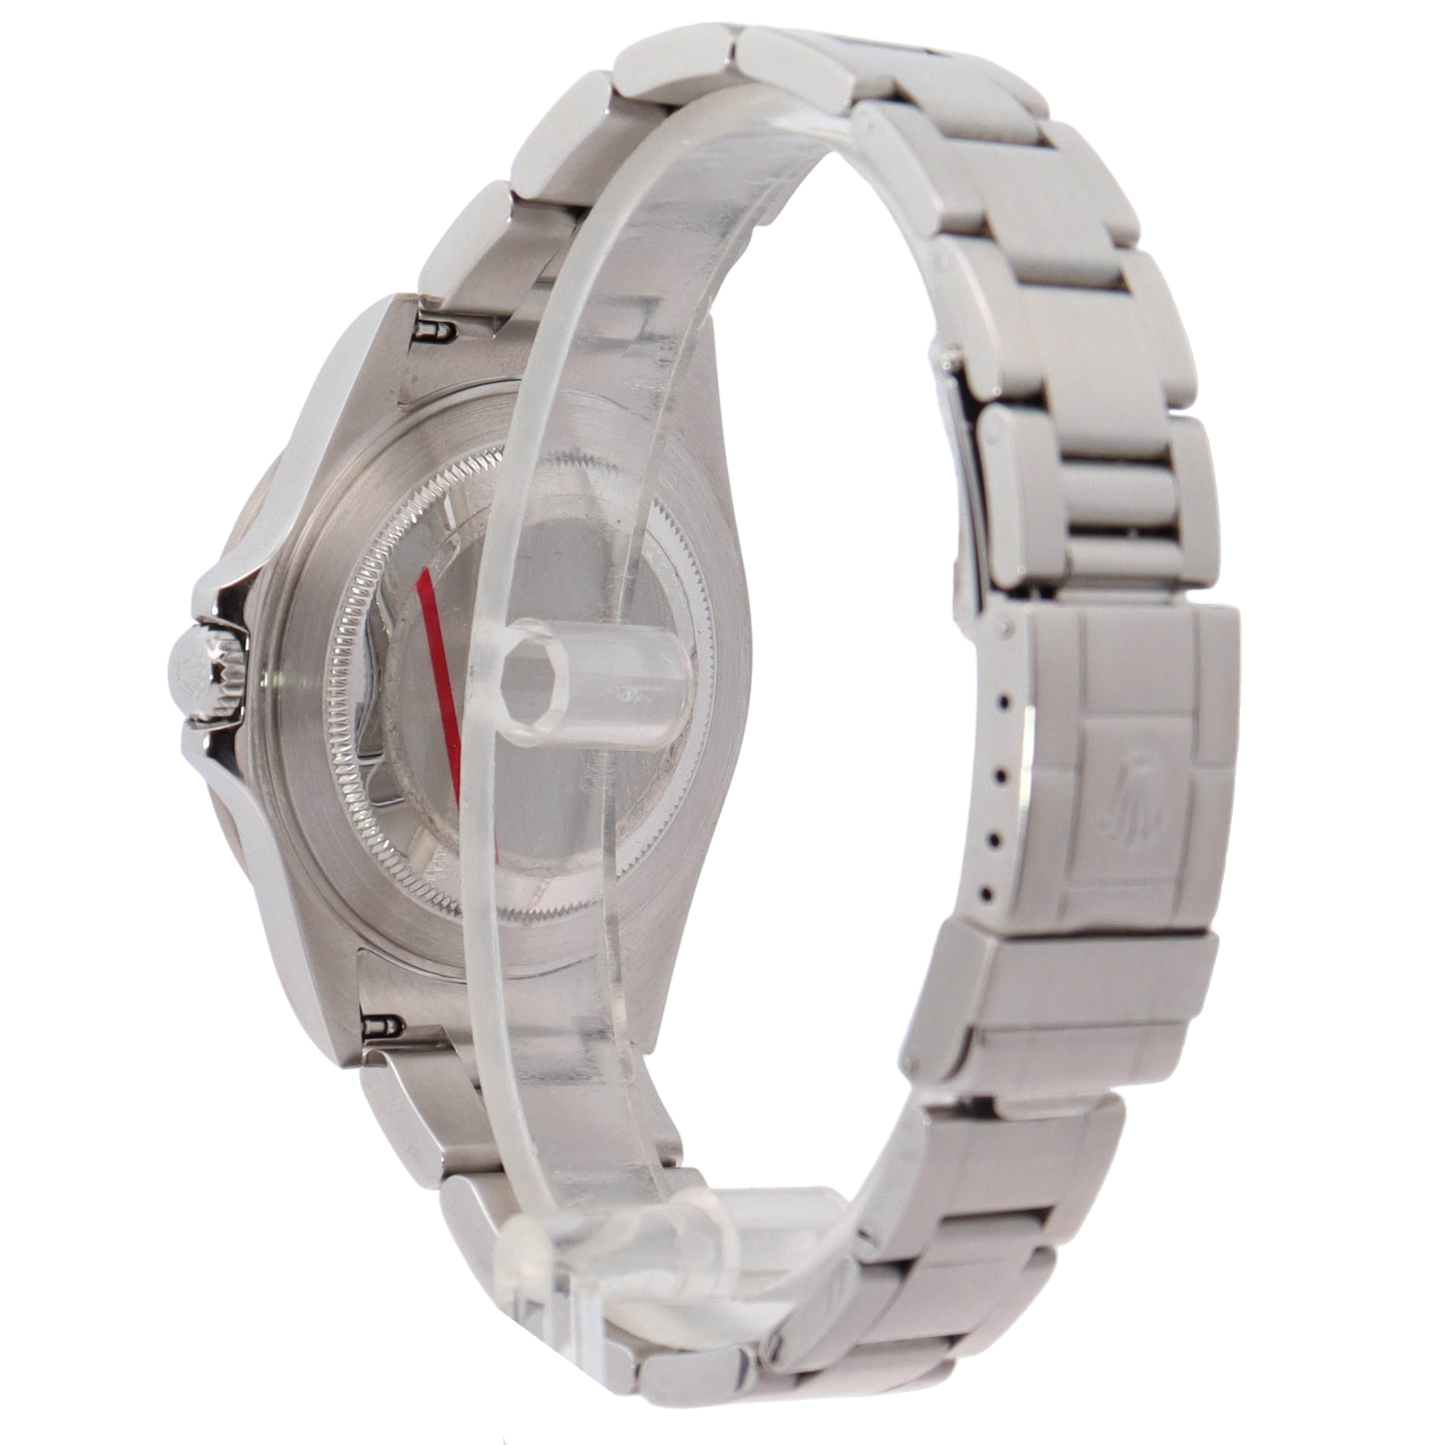 Rolex Explorer II Stainless Steel 40mm Black Dot Dial Watch Reference# 16570 - Happy Jewelers Fine Jewelry Lifetime Warranty